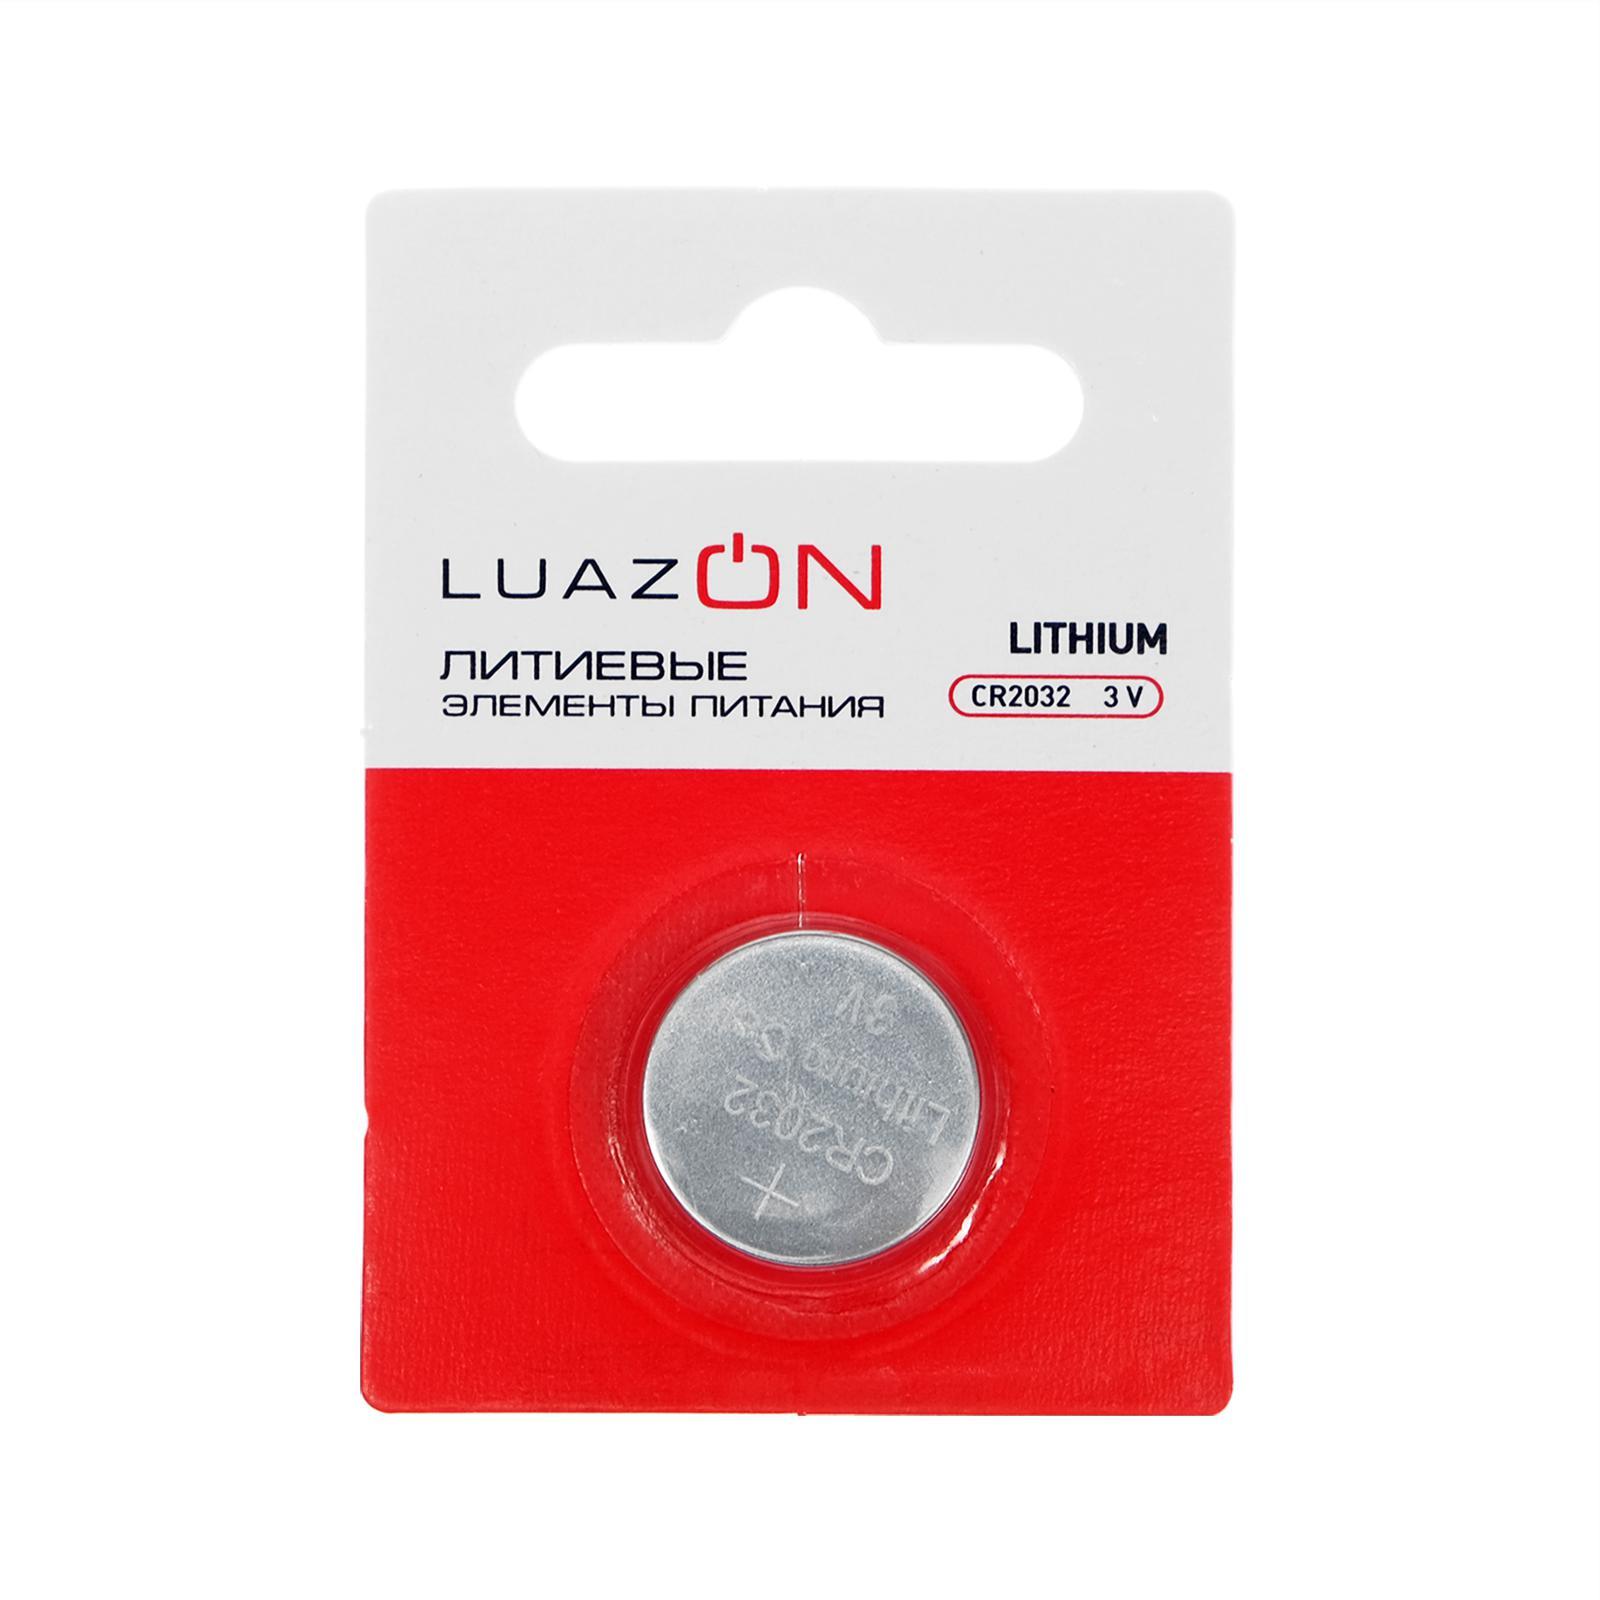 Батарейка LuazON литиевая, CR2032, блистер, 1 шт